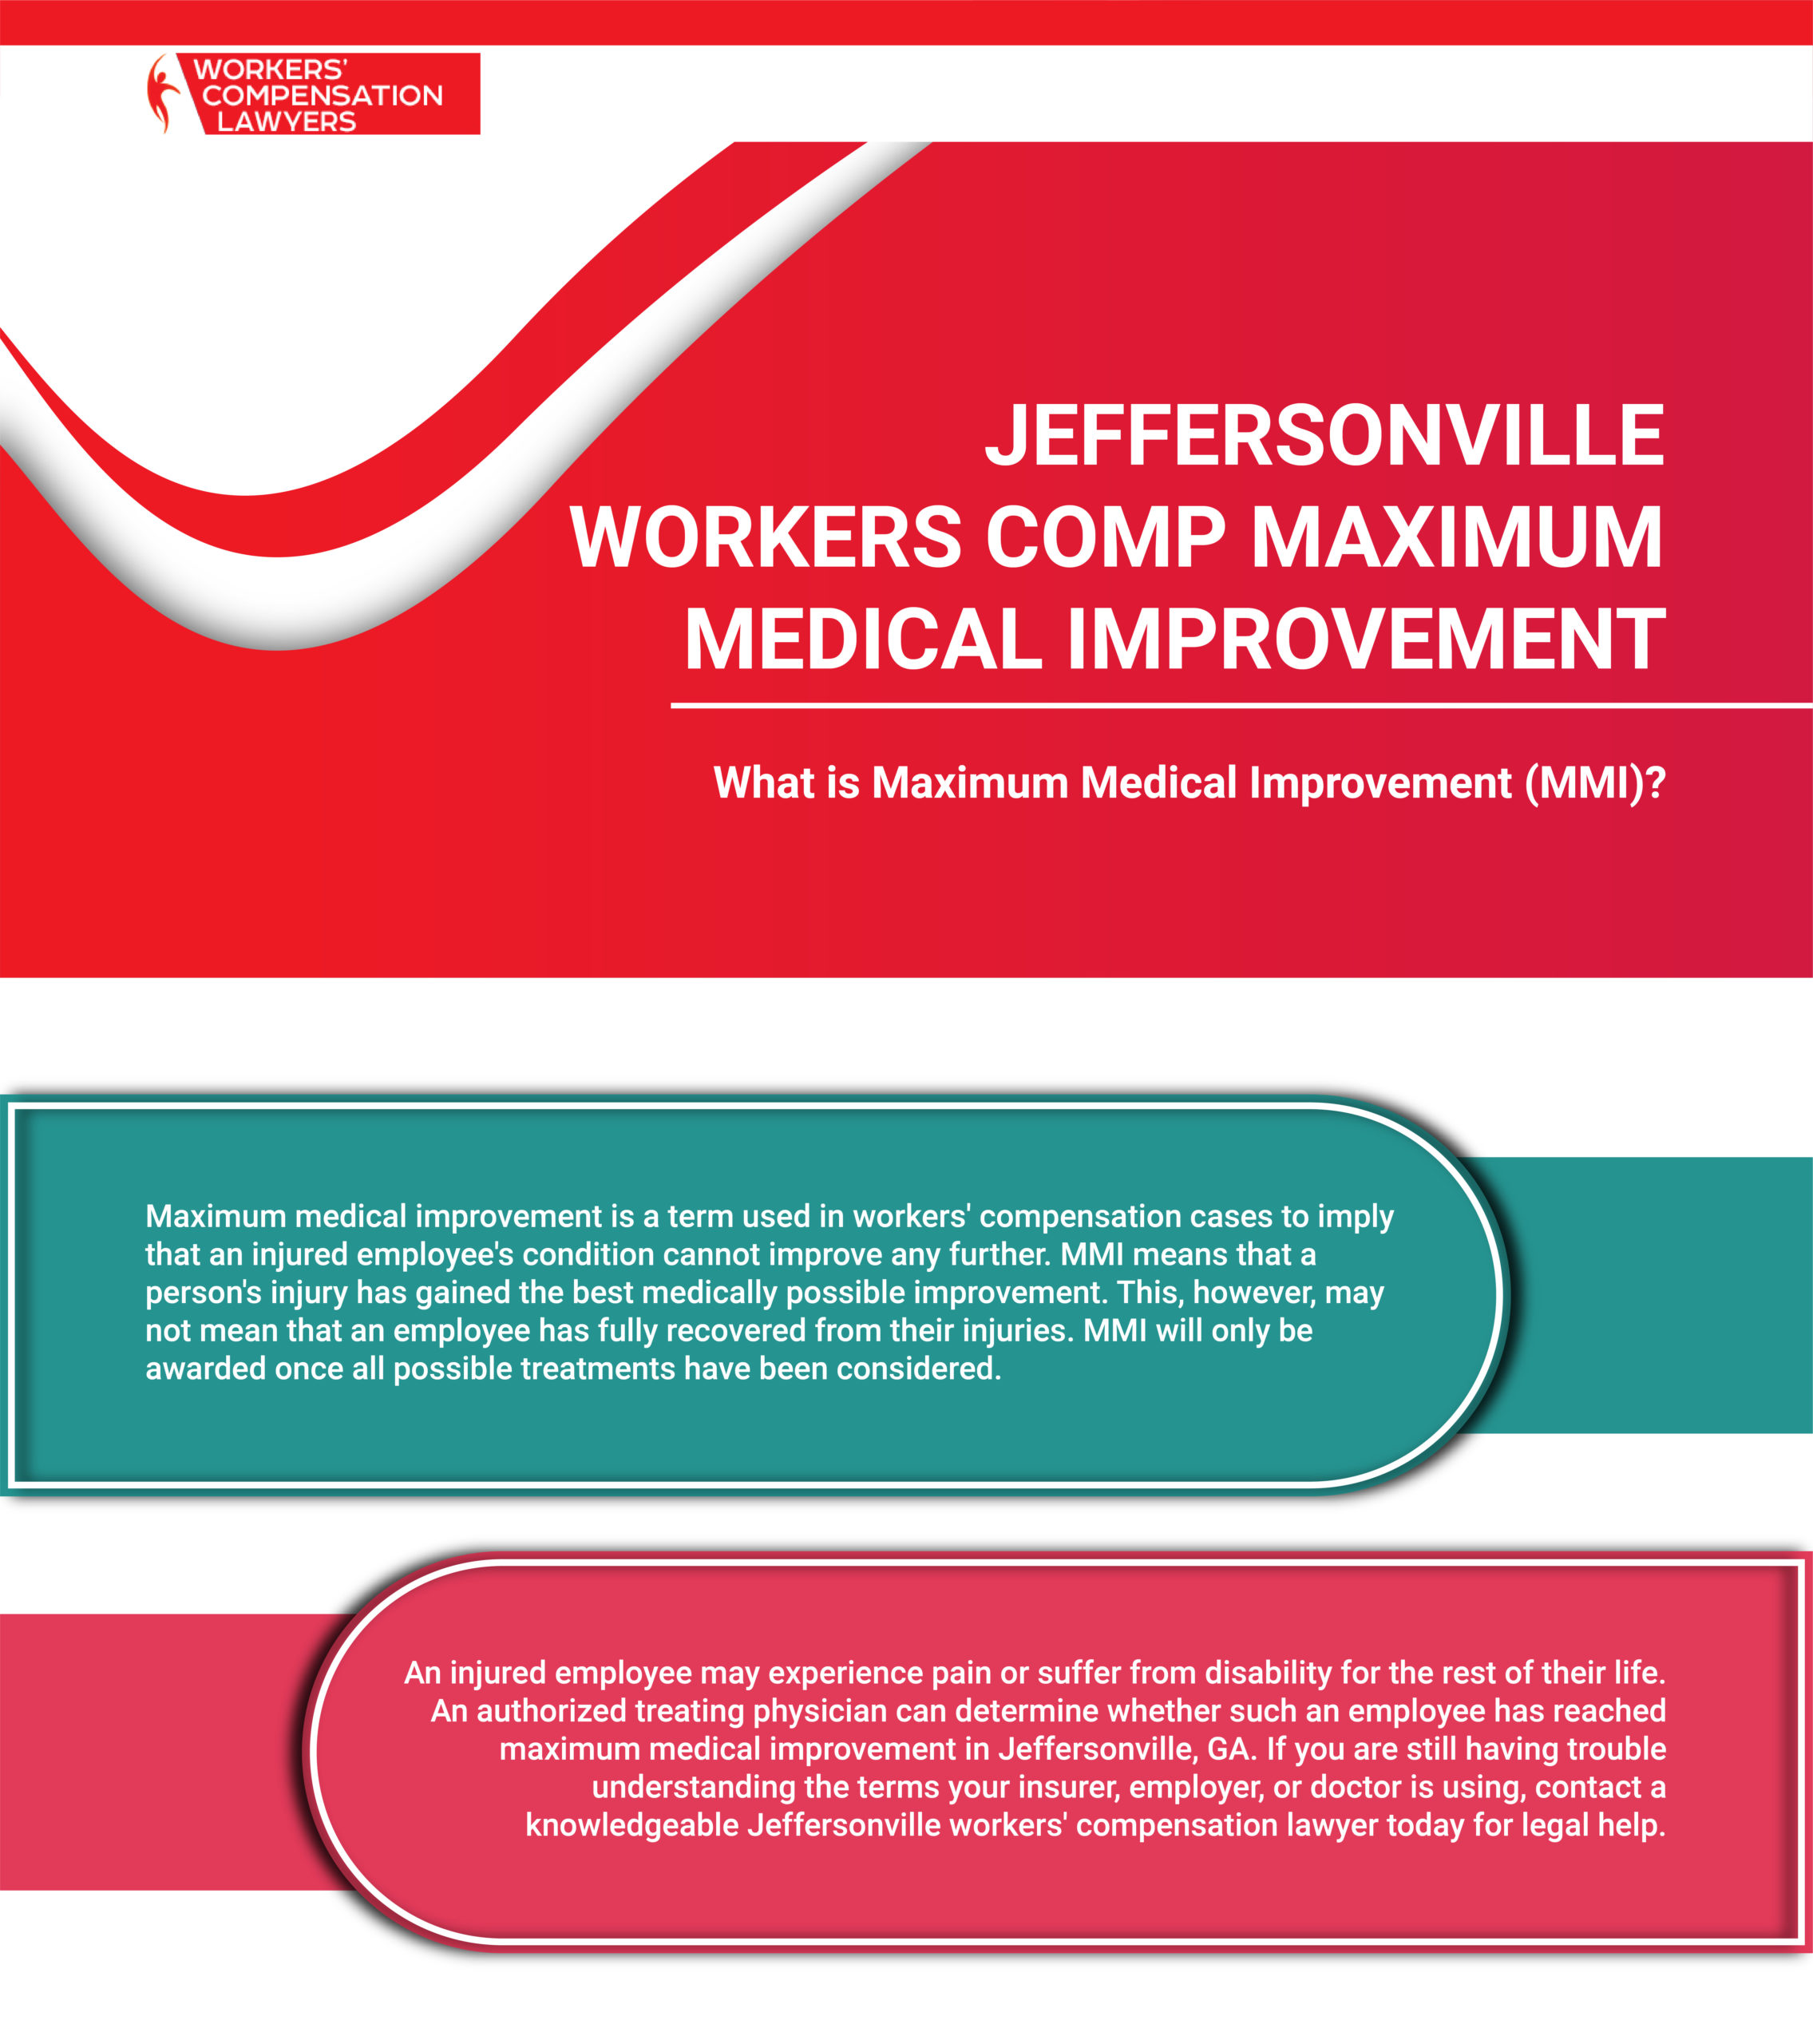 Jeffersonville Workers Compensation Maximum Medical Improvement Infographic